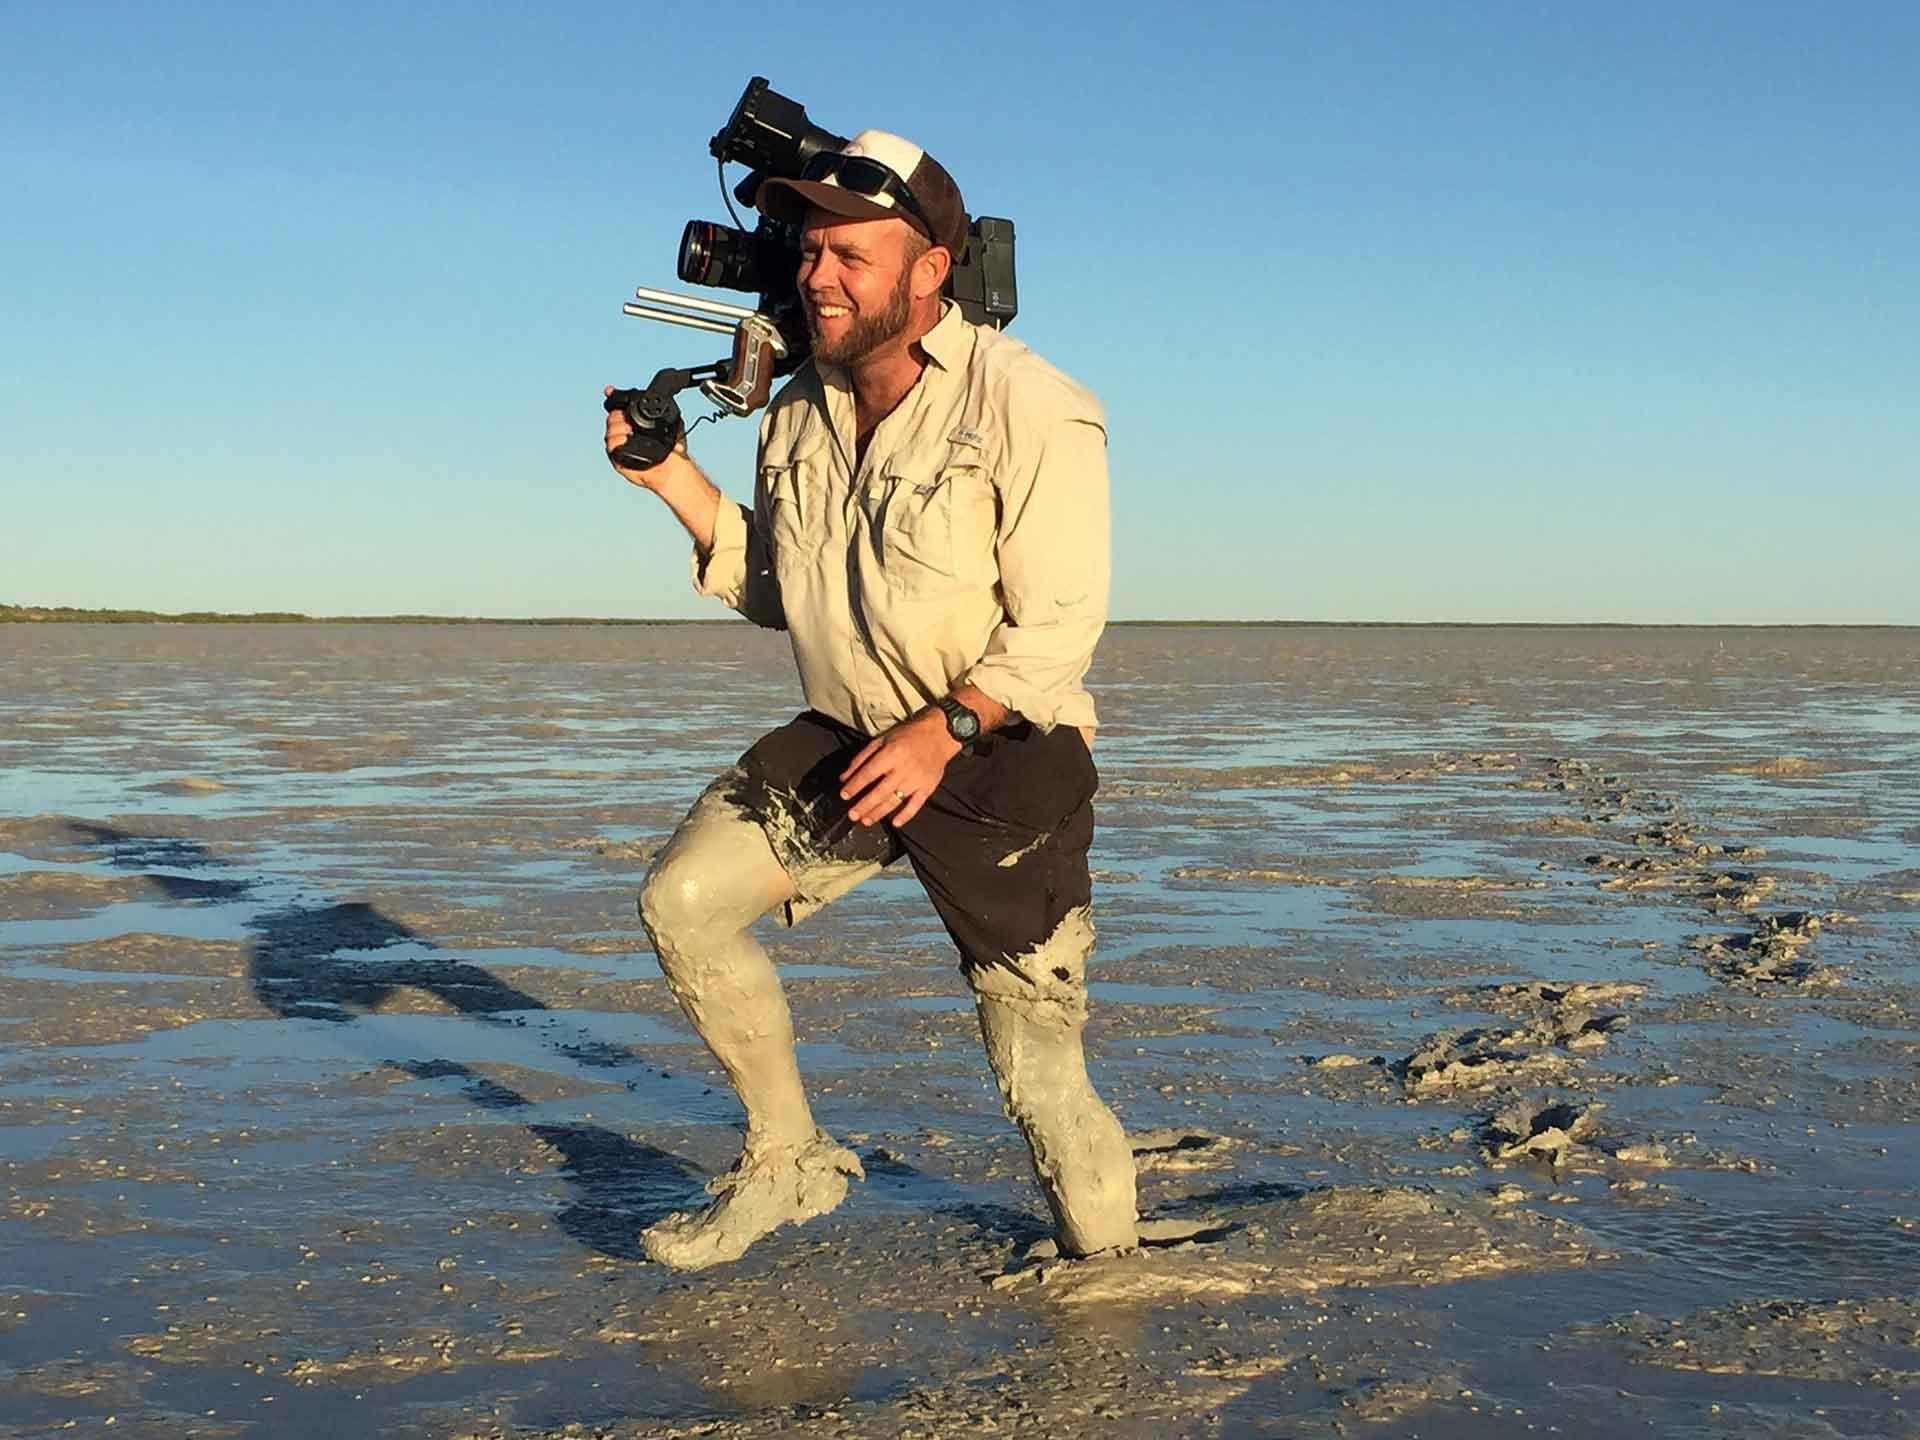 Cameraman, Paul Bell, traipsing through the mud.